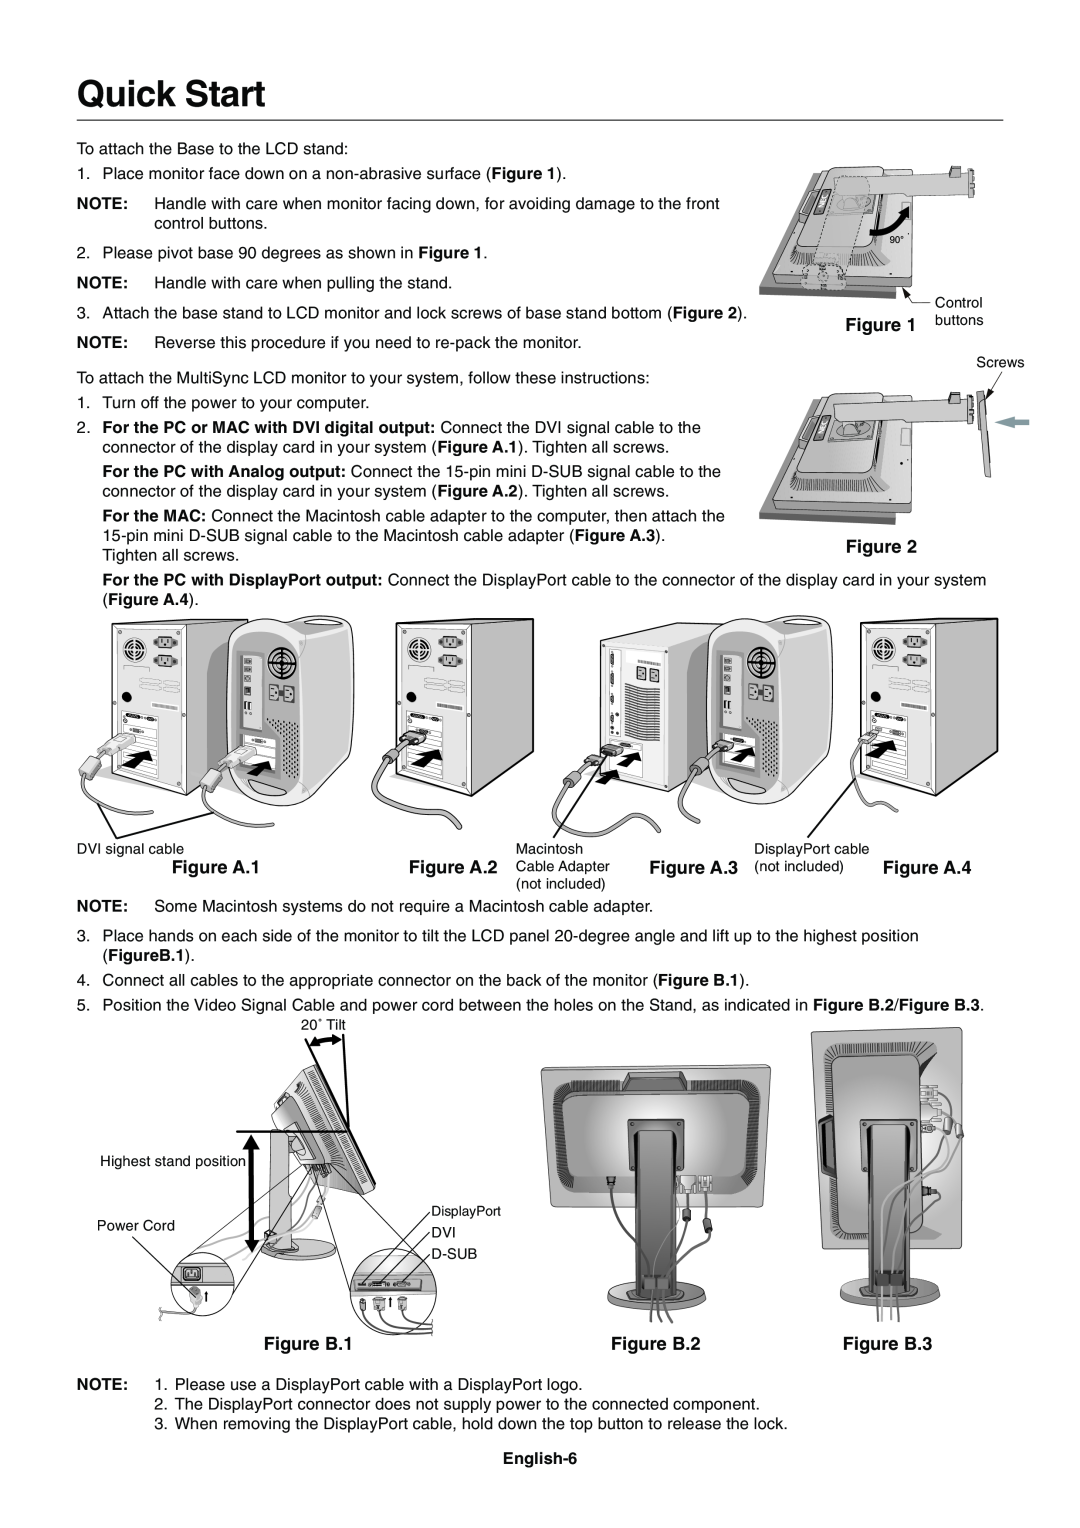 NEC E231W-BK user manual Quick Start, Figure A.1, Figure A.4, Figure B.1, Figure B.2, Figure B.3 